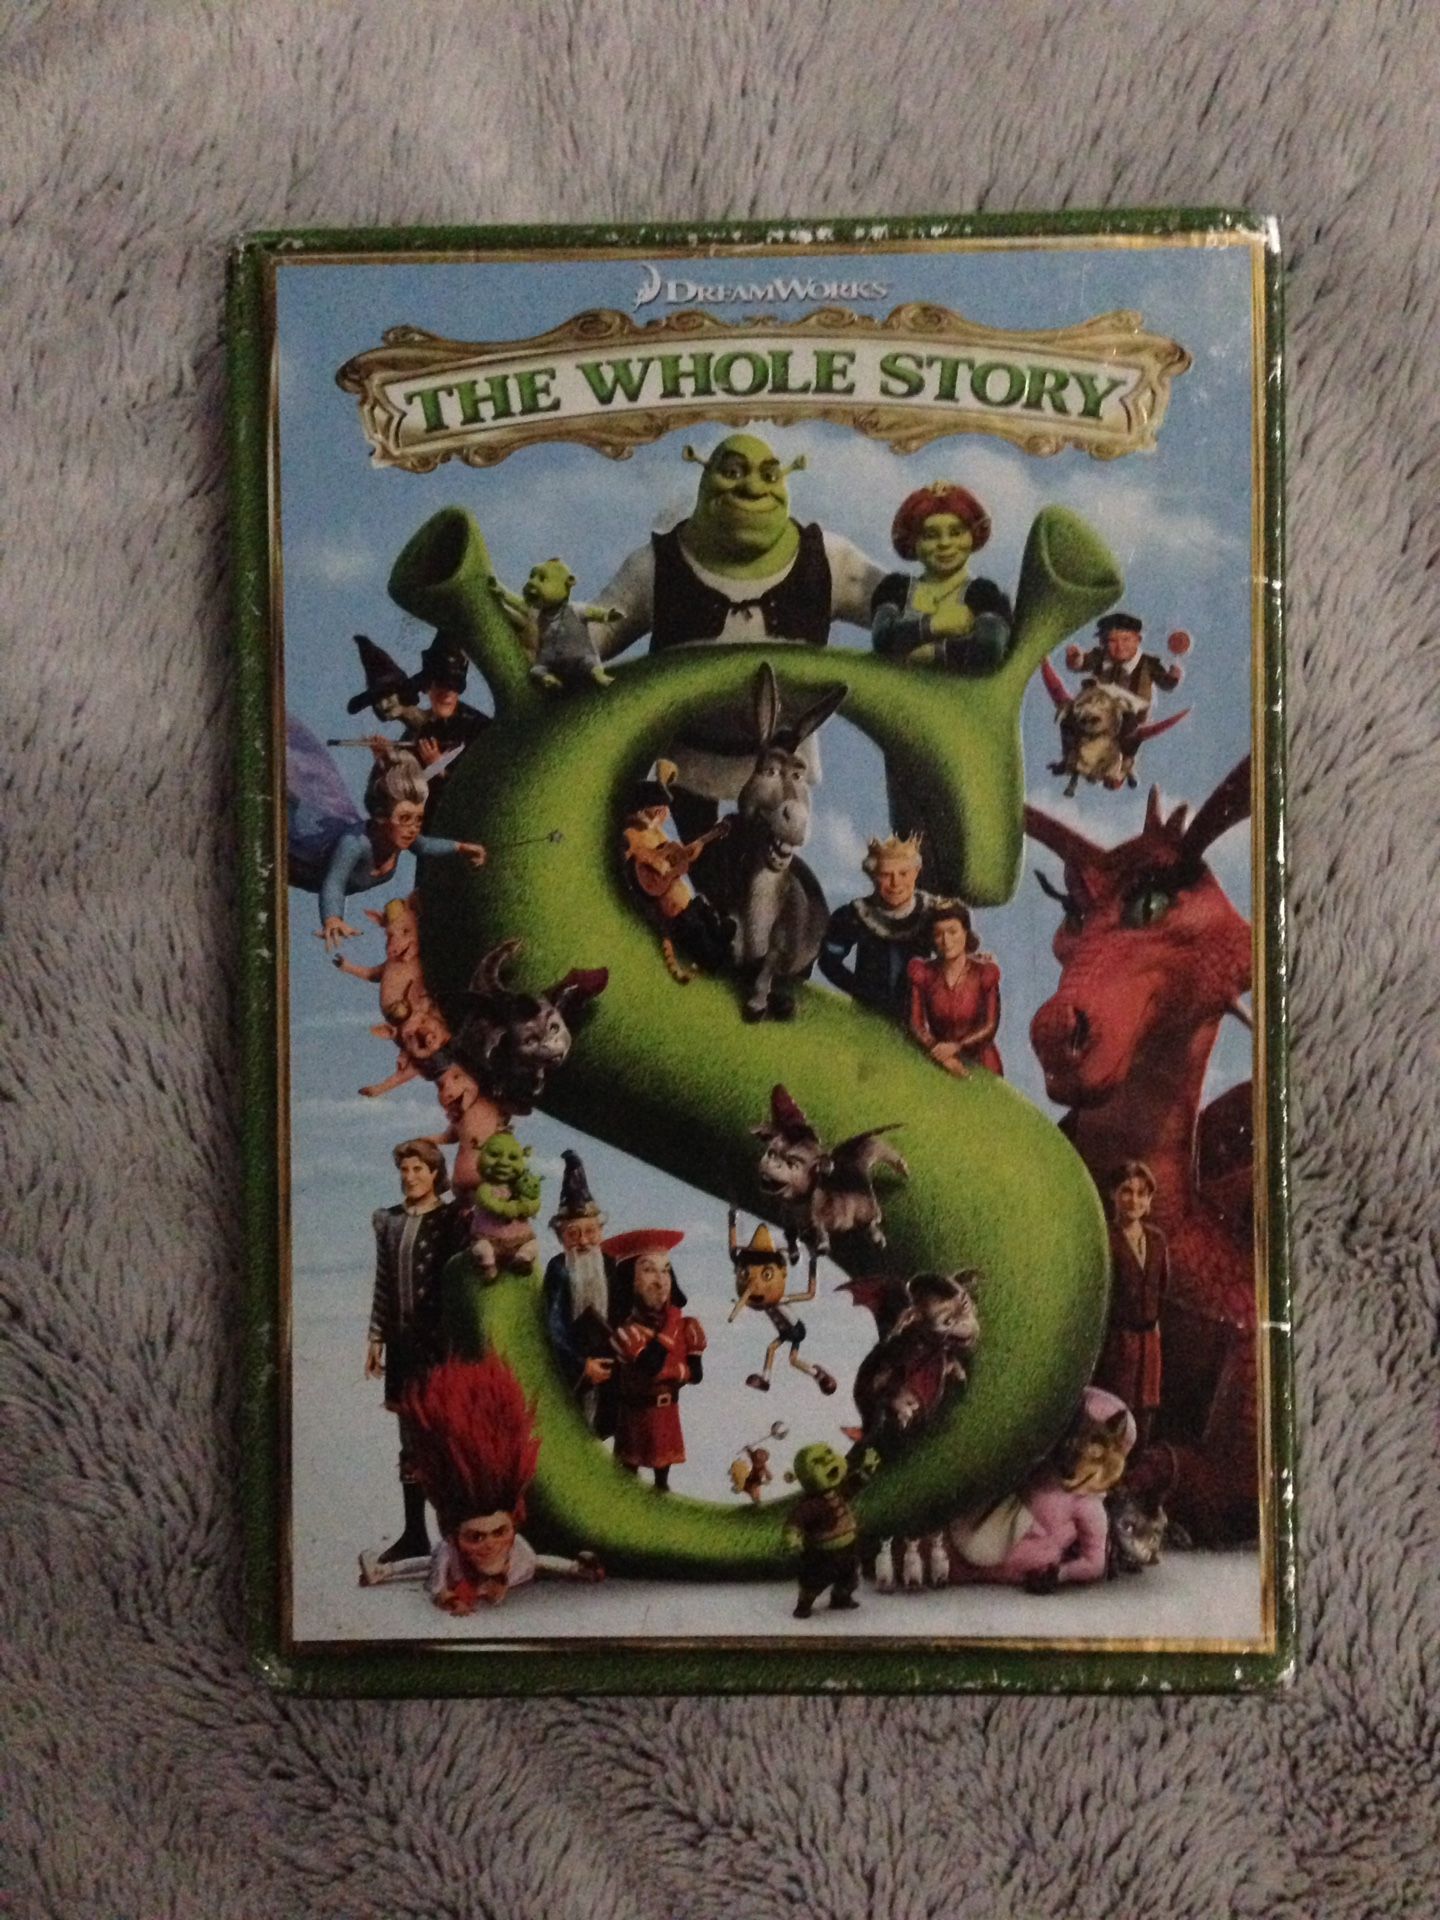 Shrek 1-4 The Whole Story DVDs